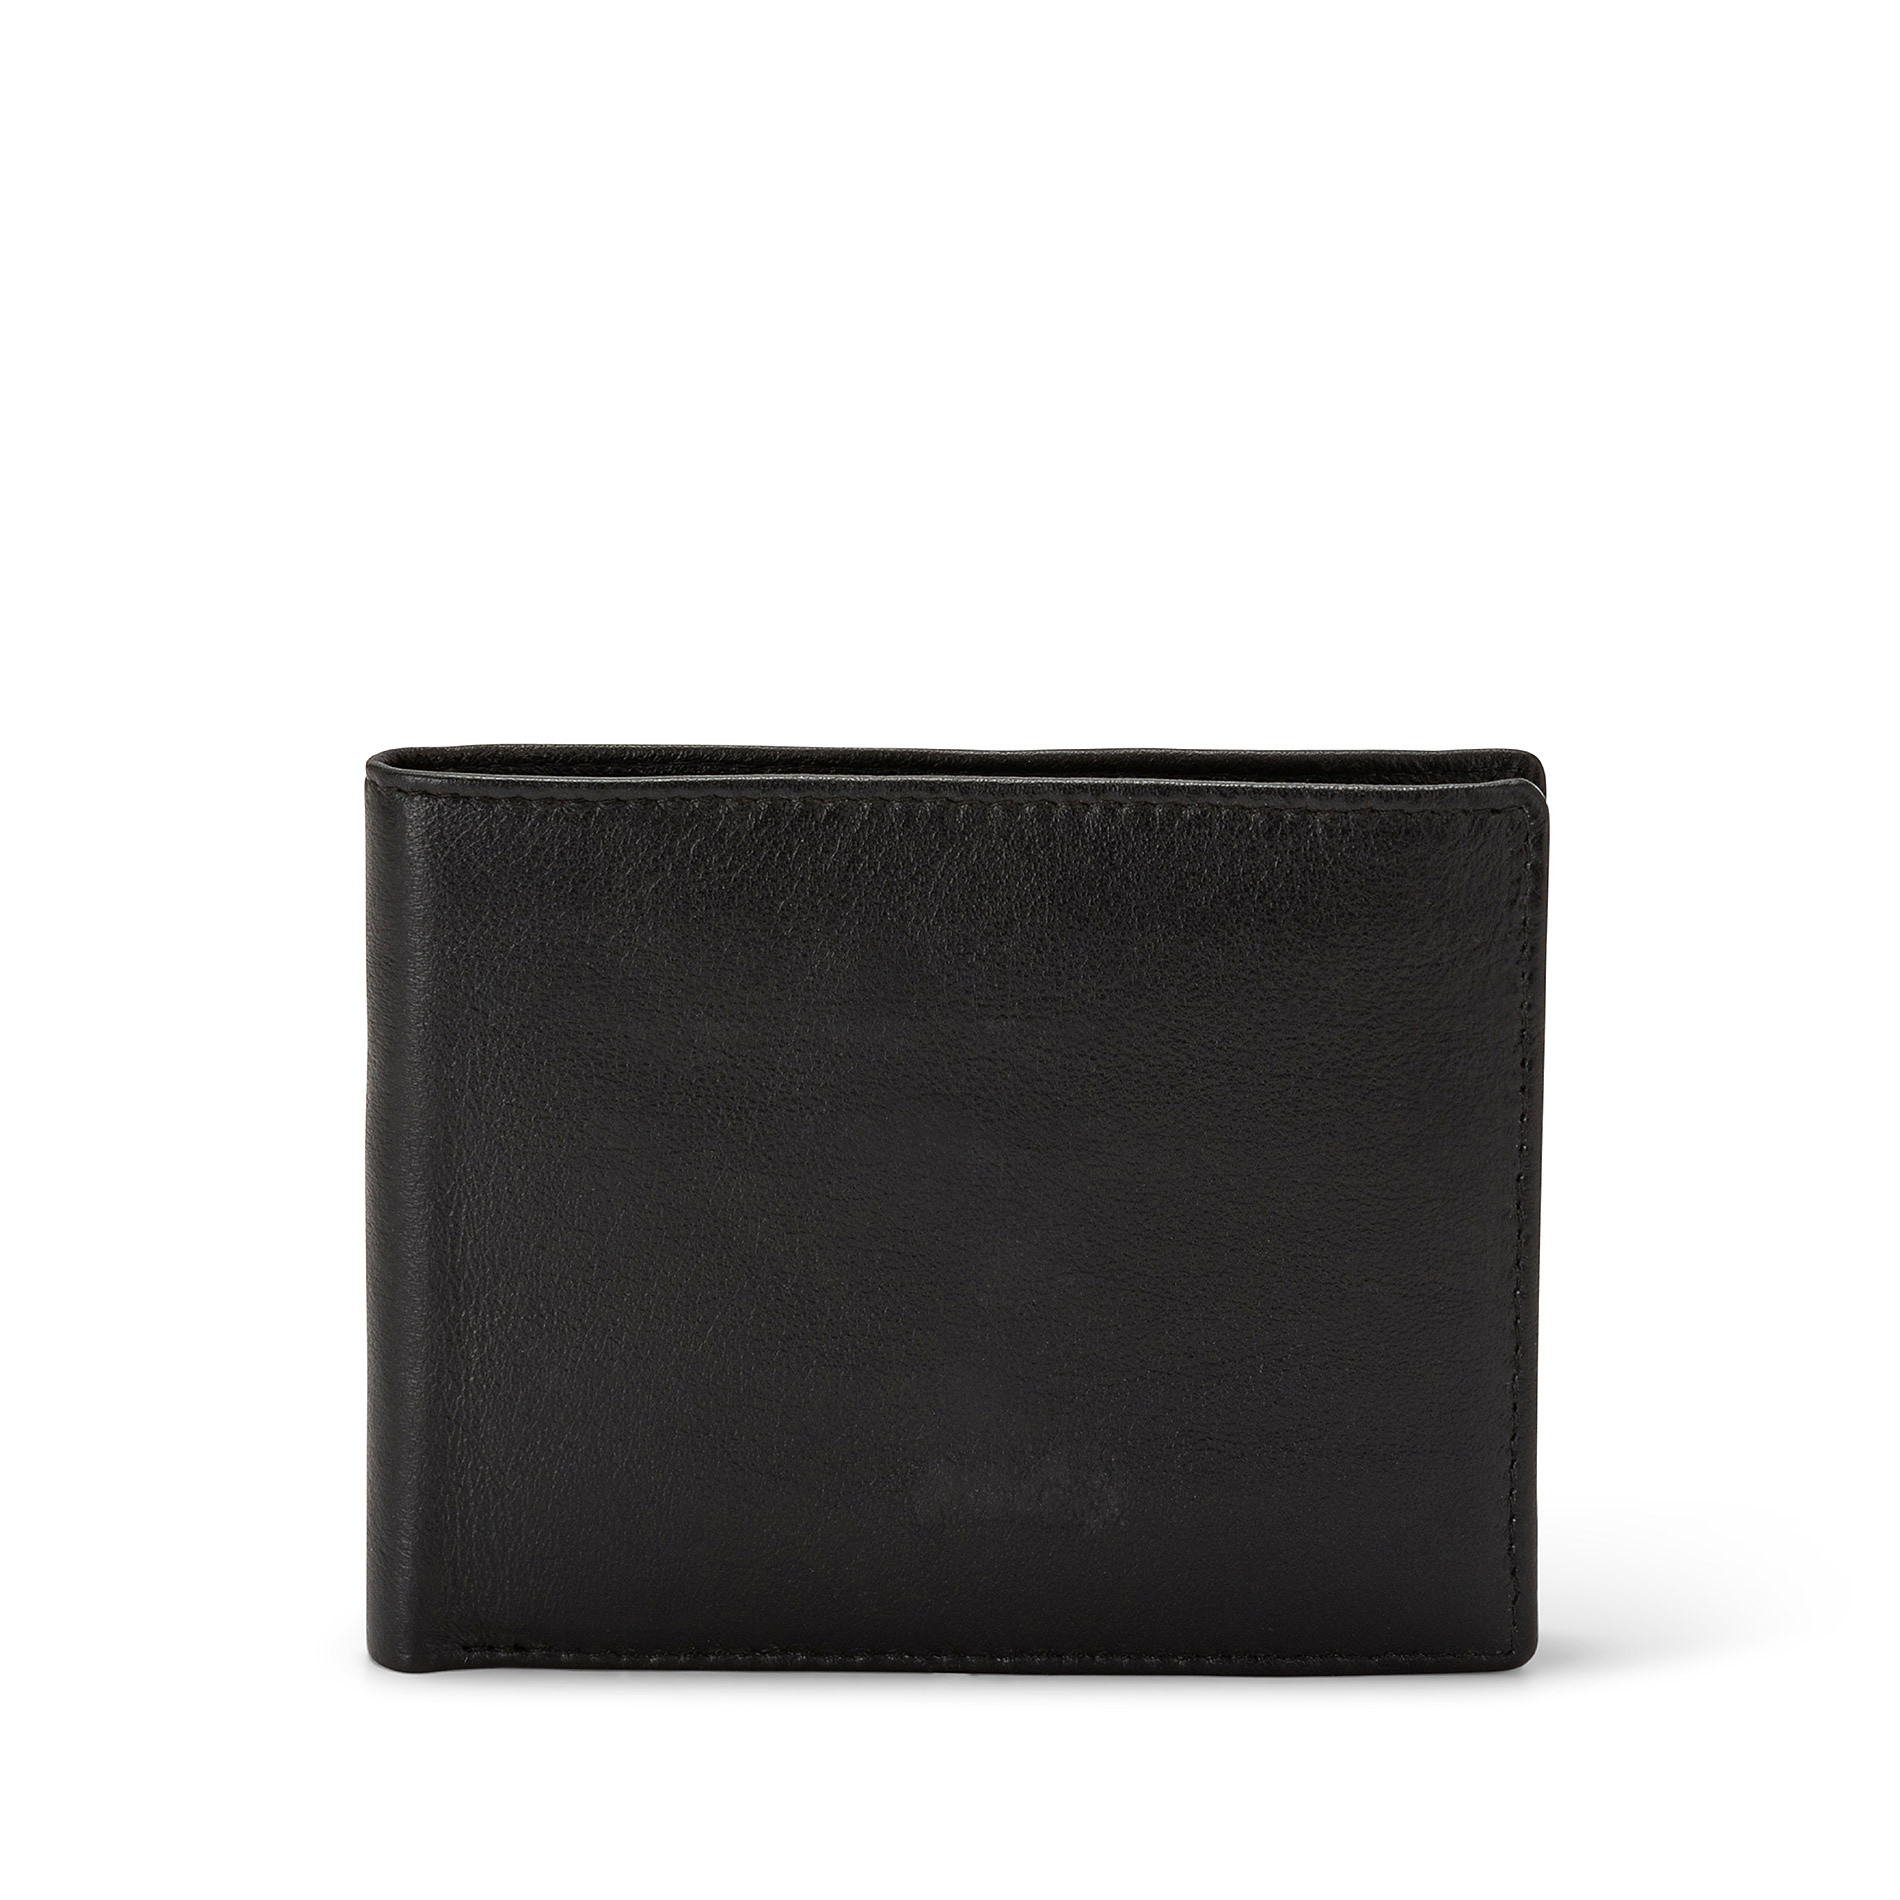 Luca D'Altieri leather wallet, Black, large image number 0